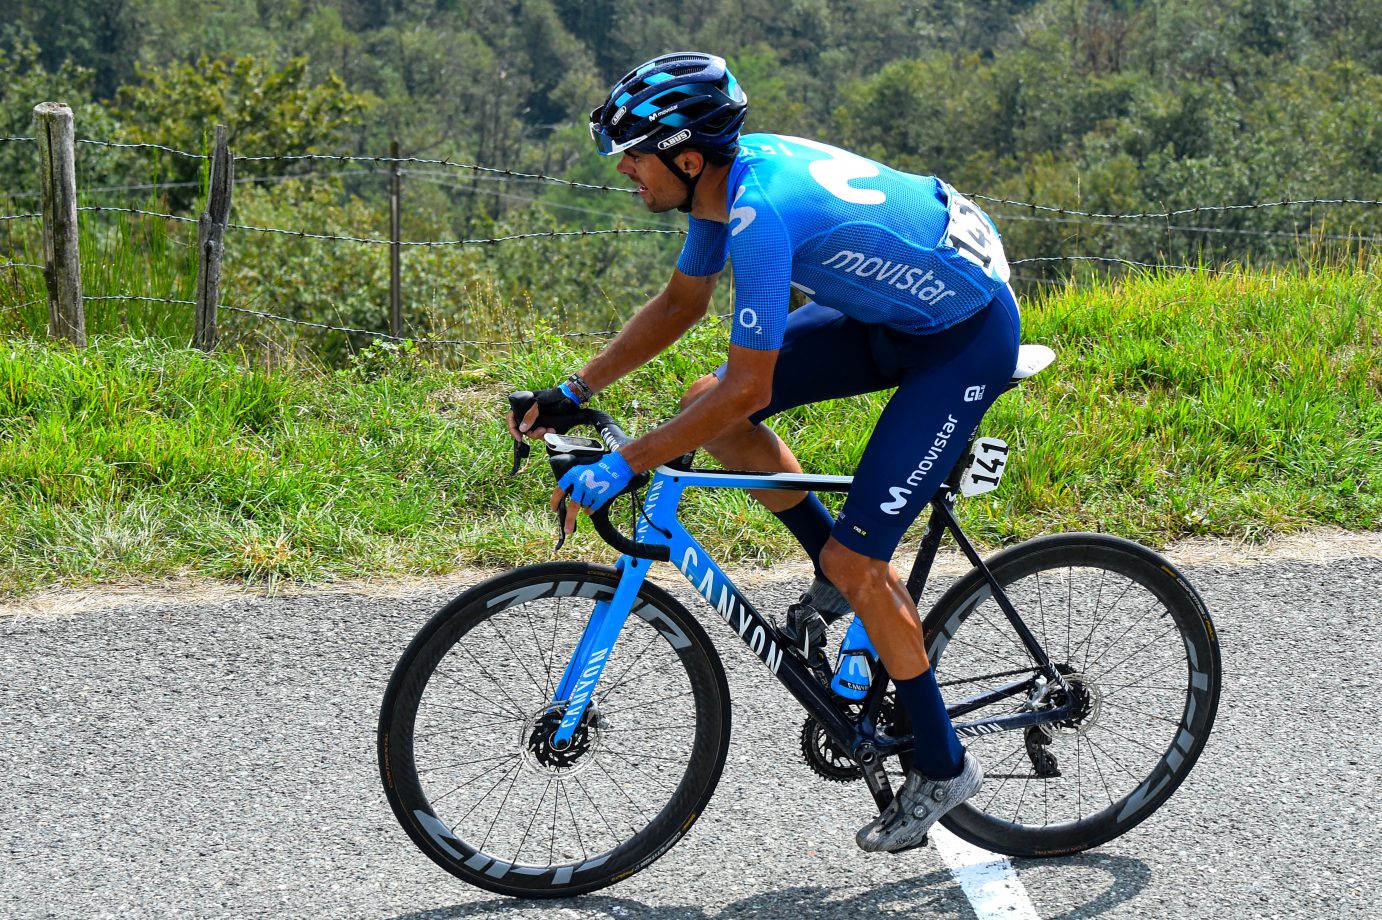 Enric Mas takes brilliant 5th overall in 2020 Tour de France | Movistar Team